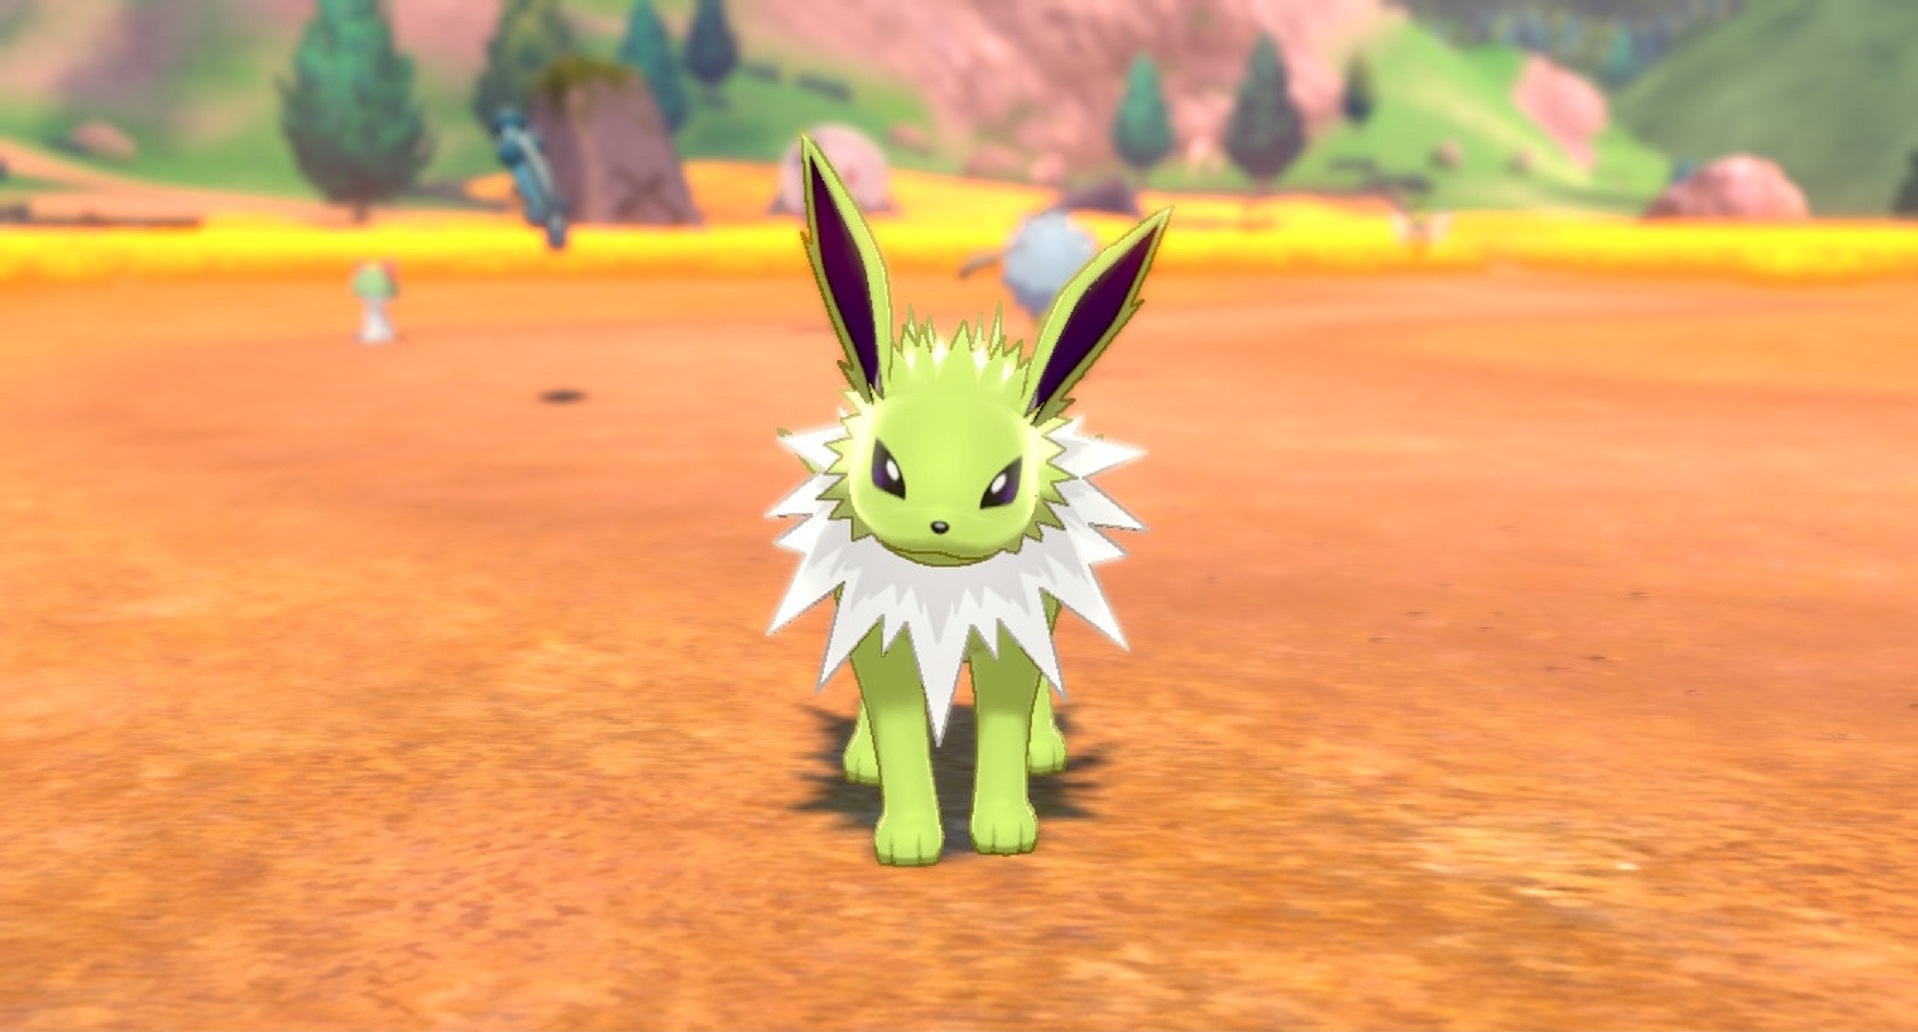 Pokémon Eevee evolutions: Shiny Jolteon in the wild.